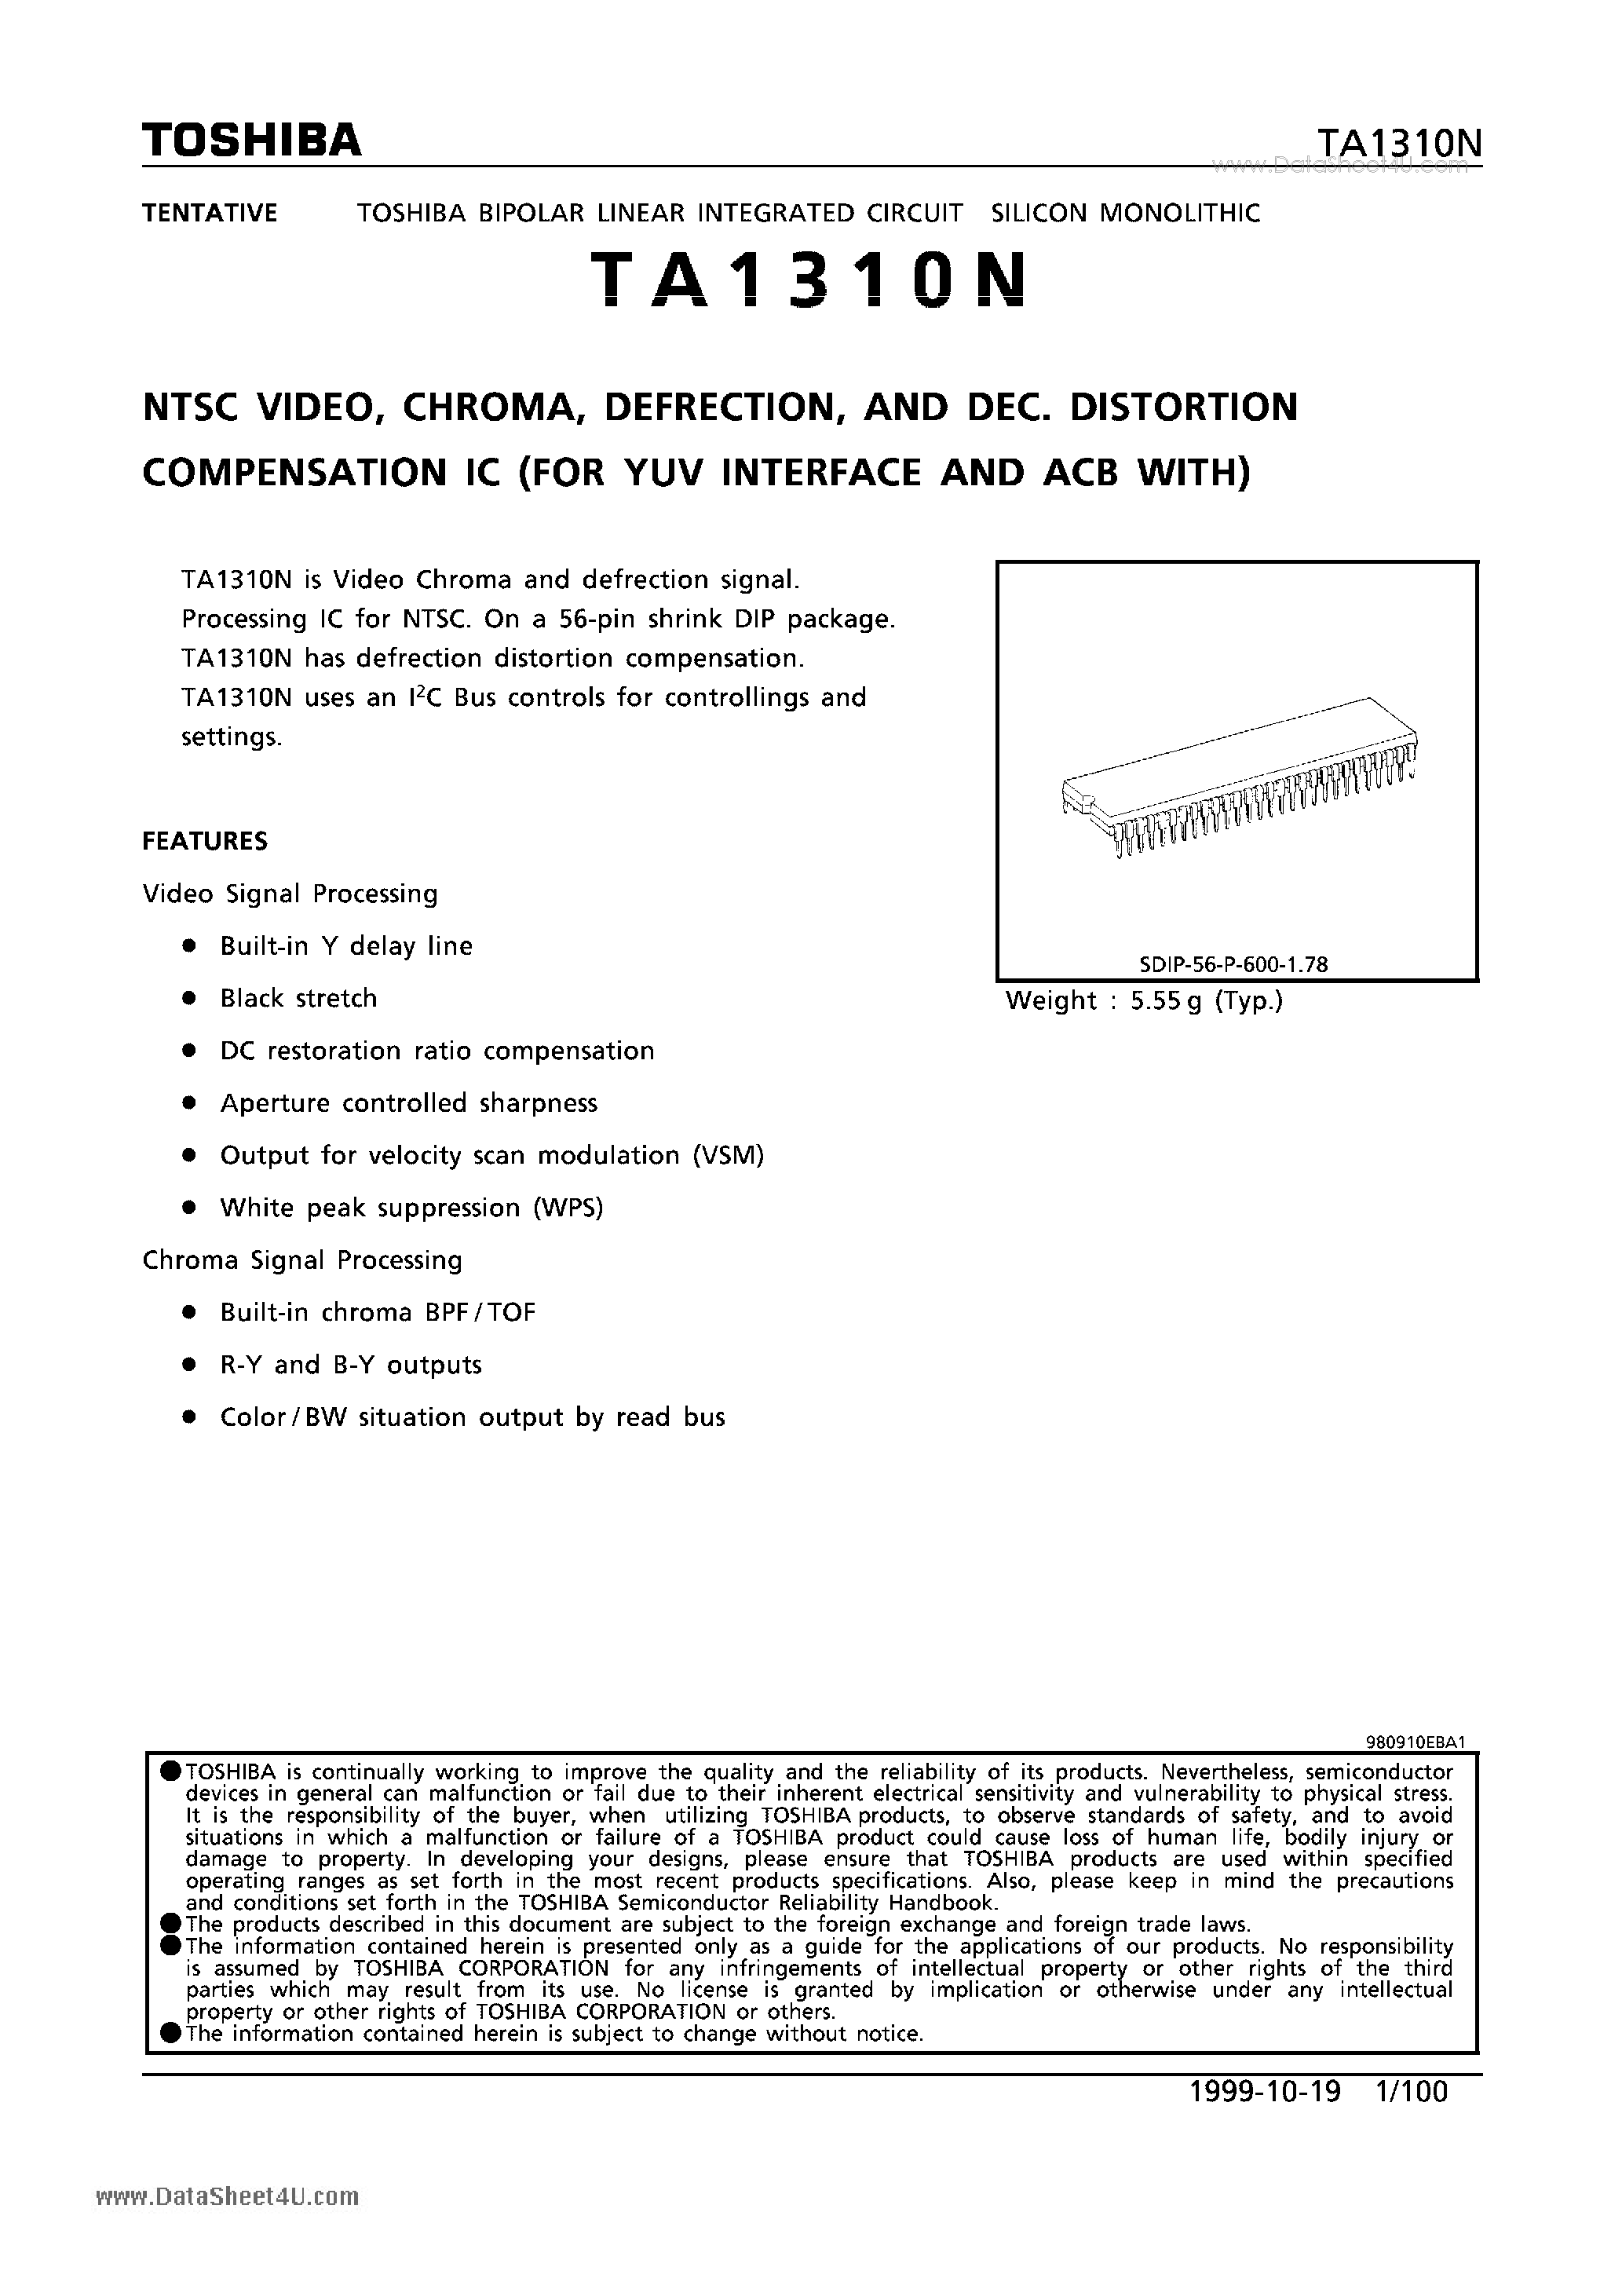 Datasheet TA1310N - DISTORTION COMPENSATION IC page 1